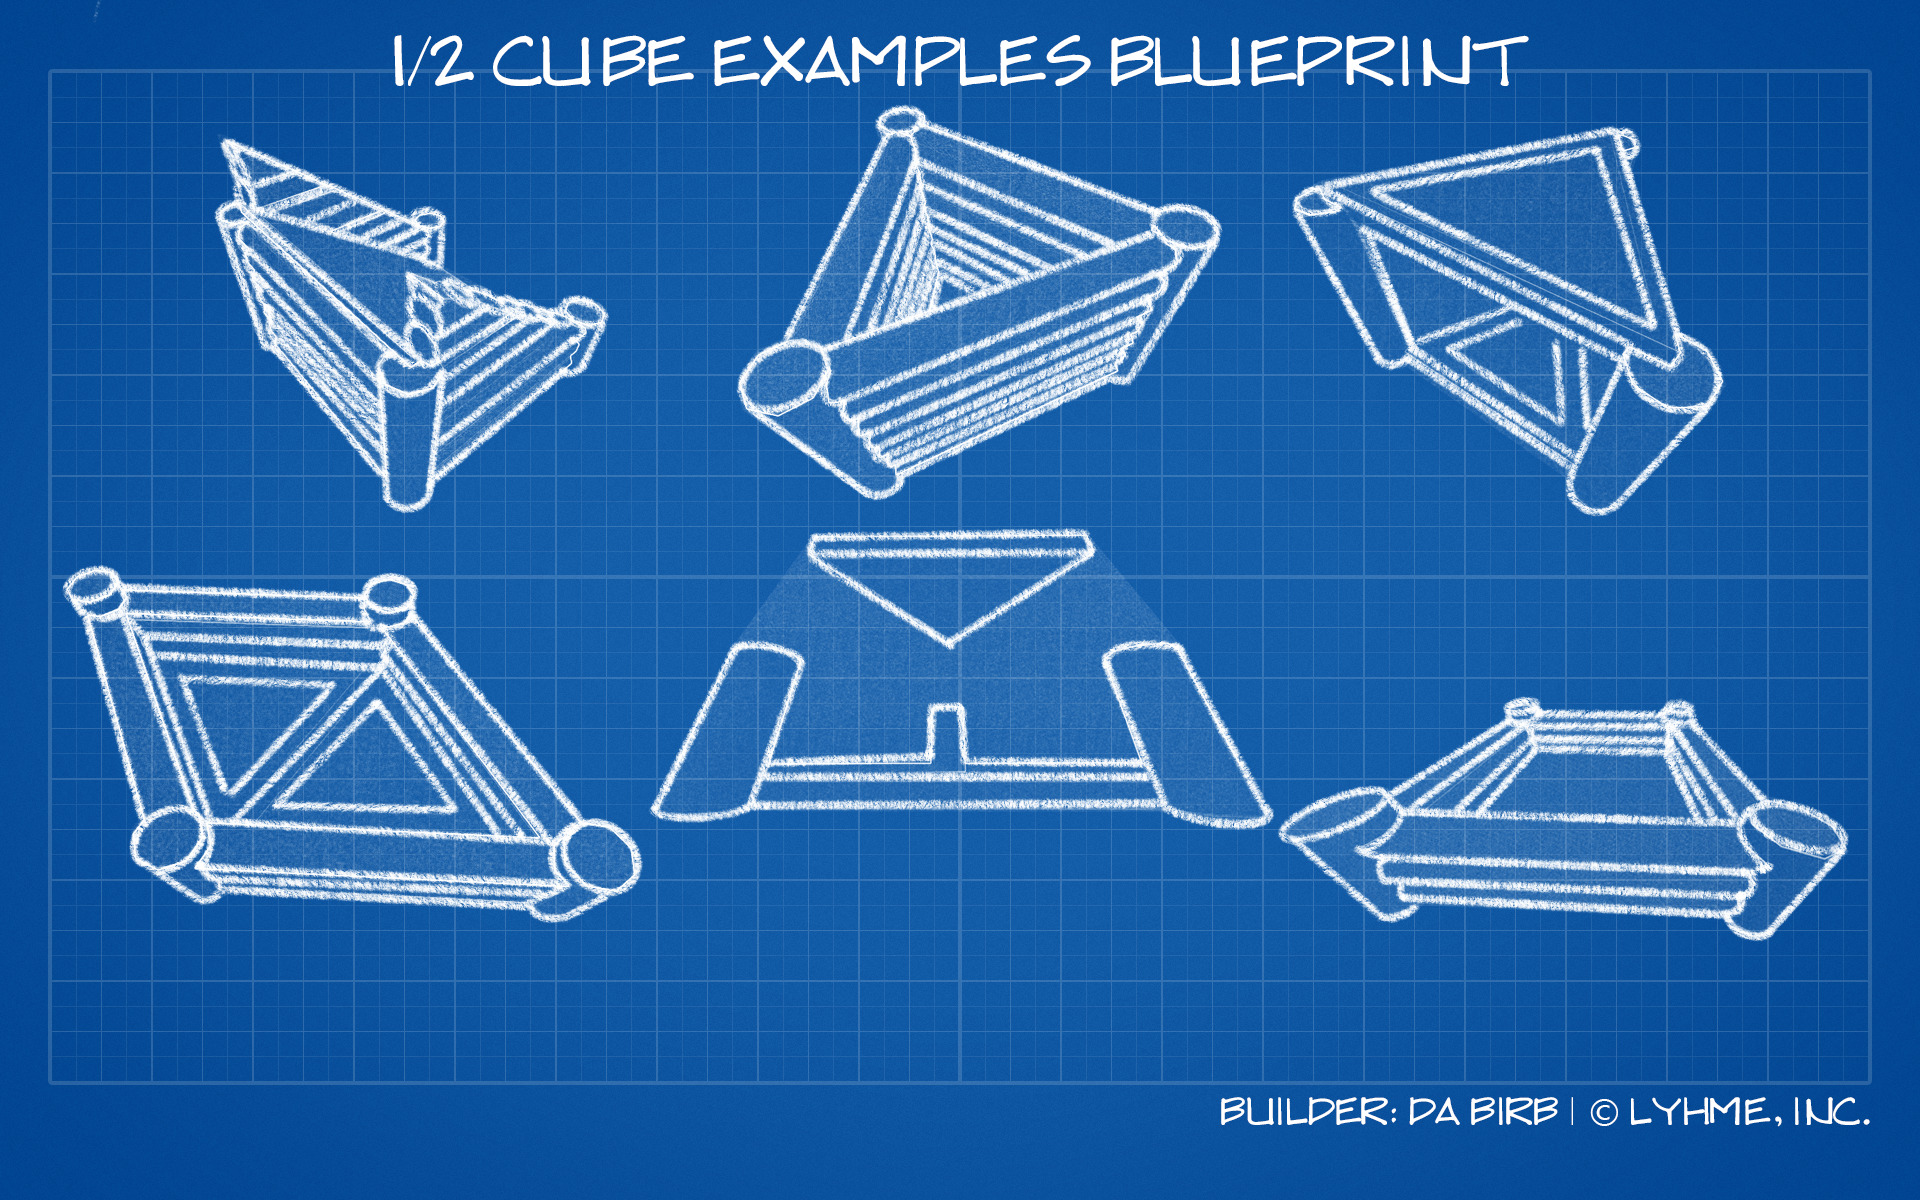 Blueprint 1/2 Cube Examples